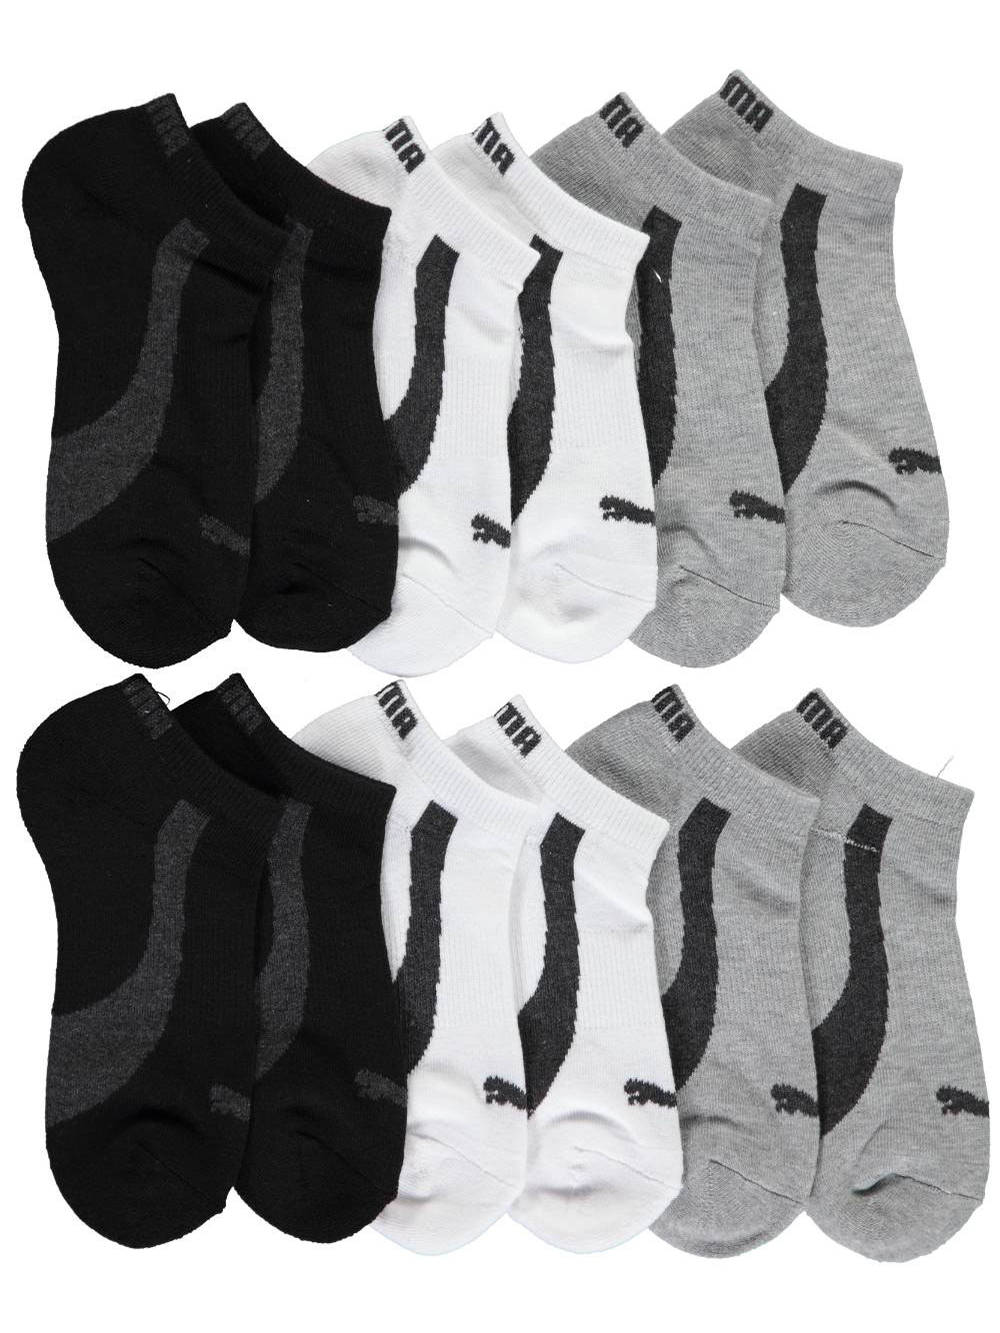 gray puma socks